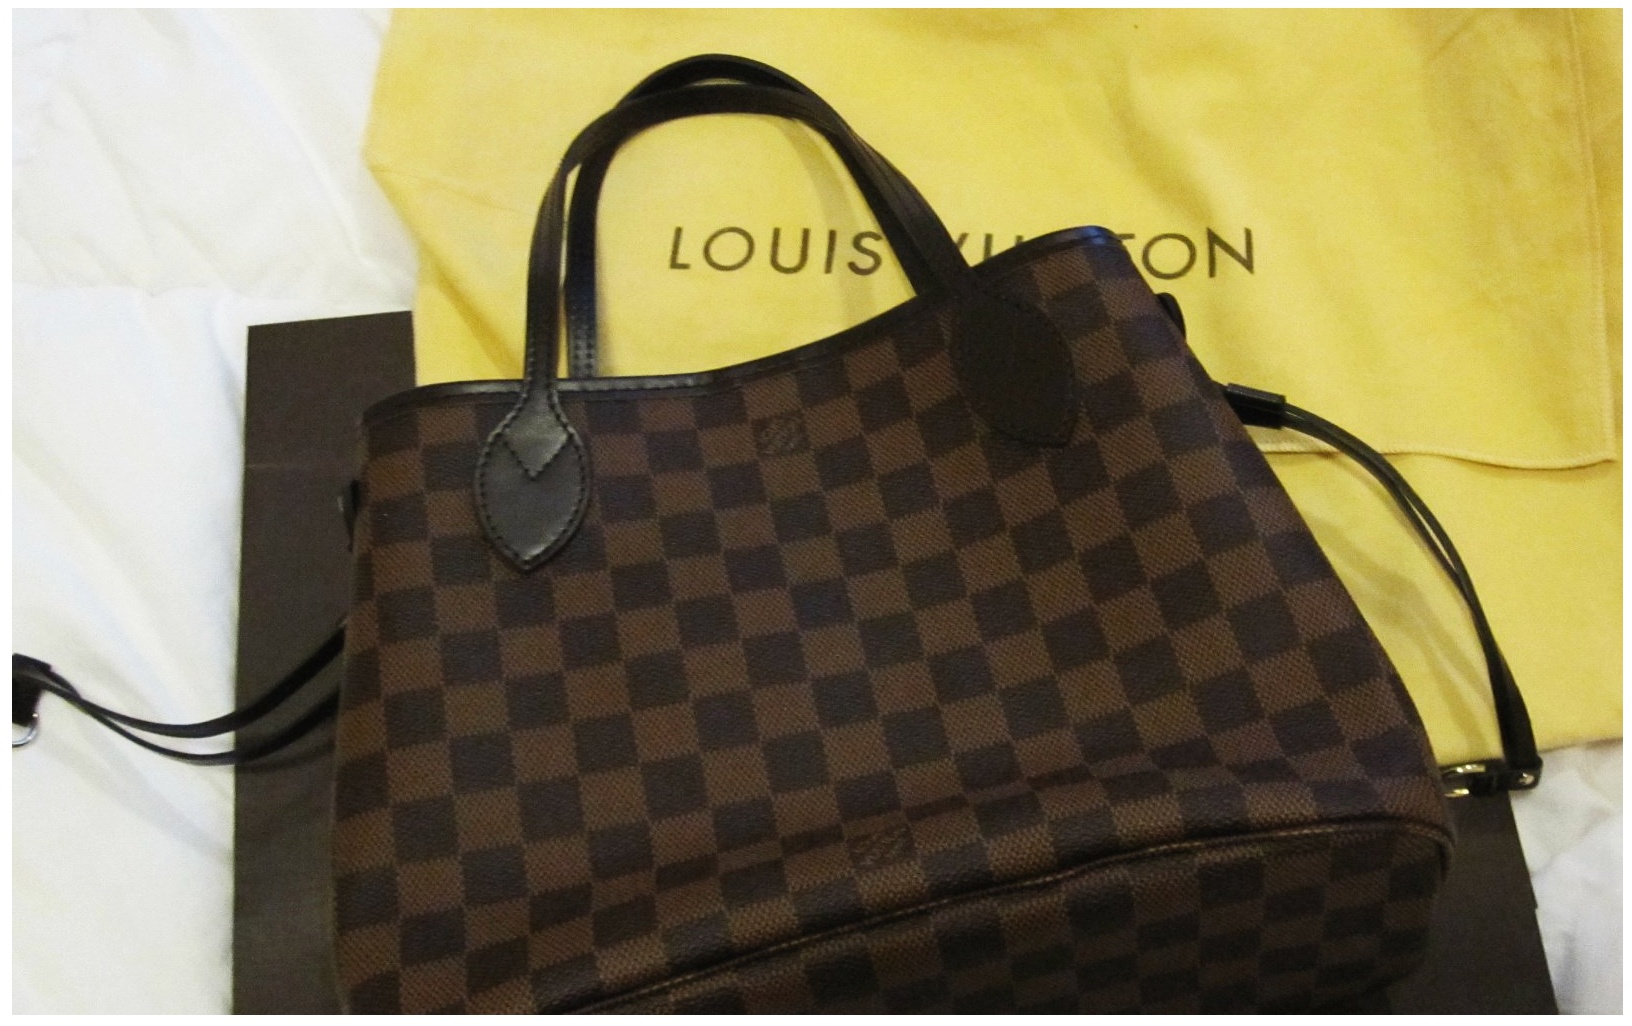 Dubai #137: Shop&Buy- My First LV Bag!